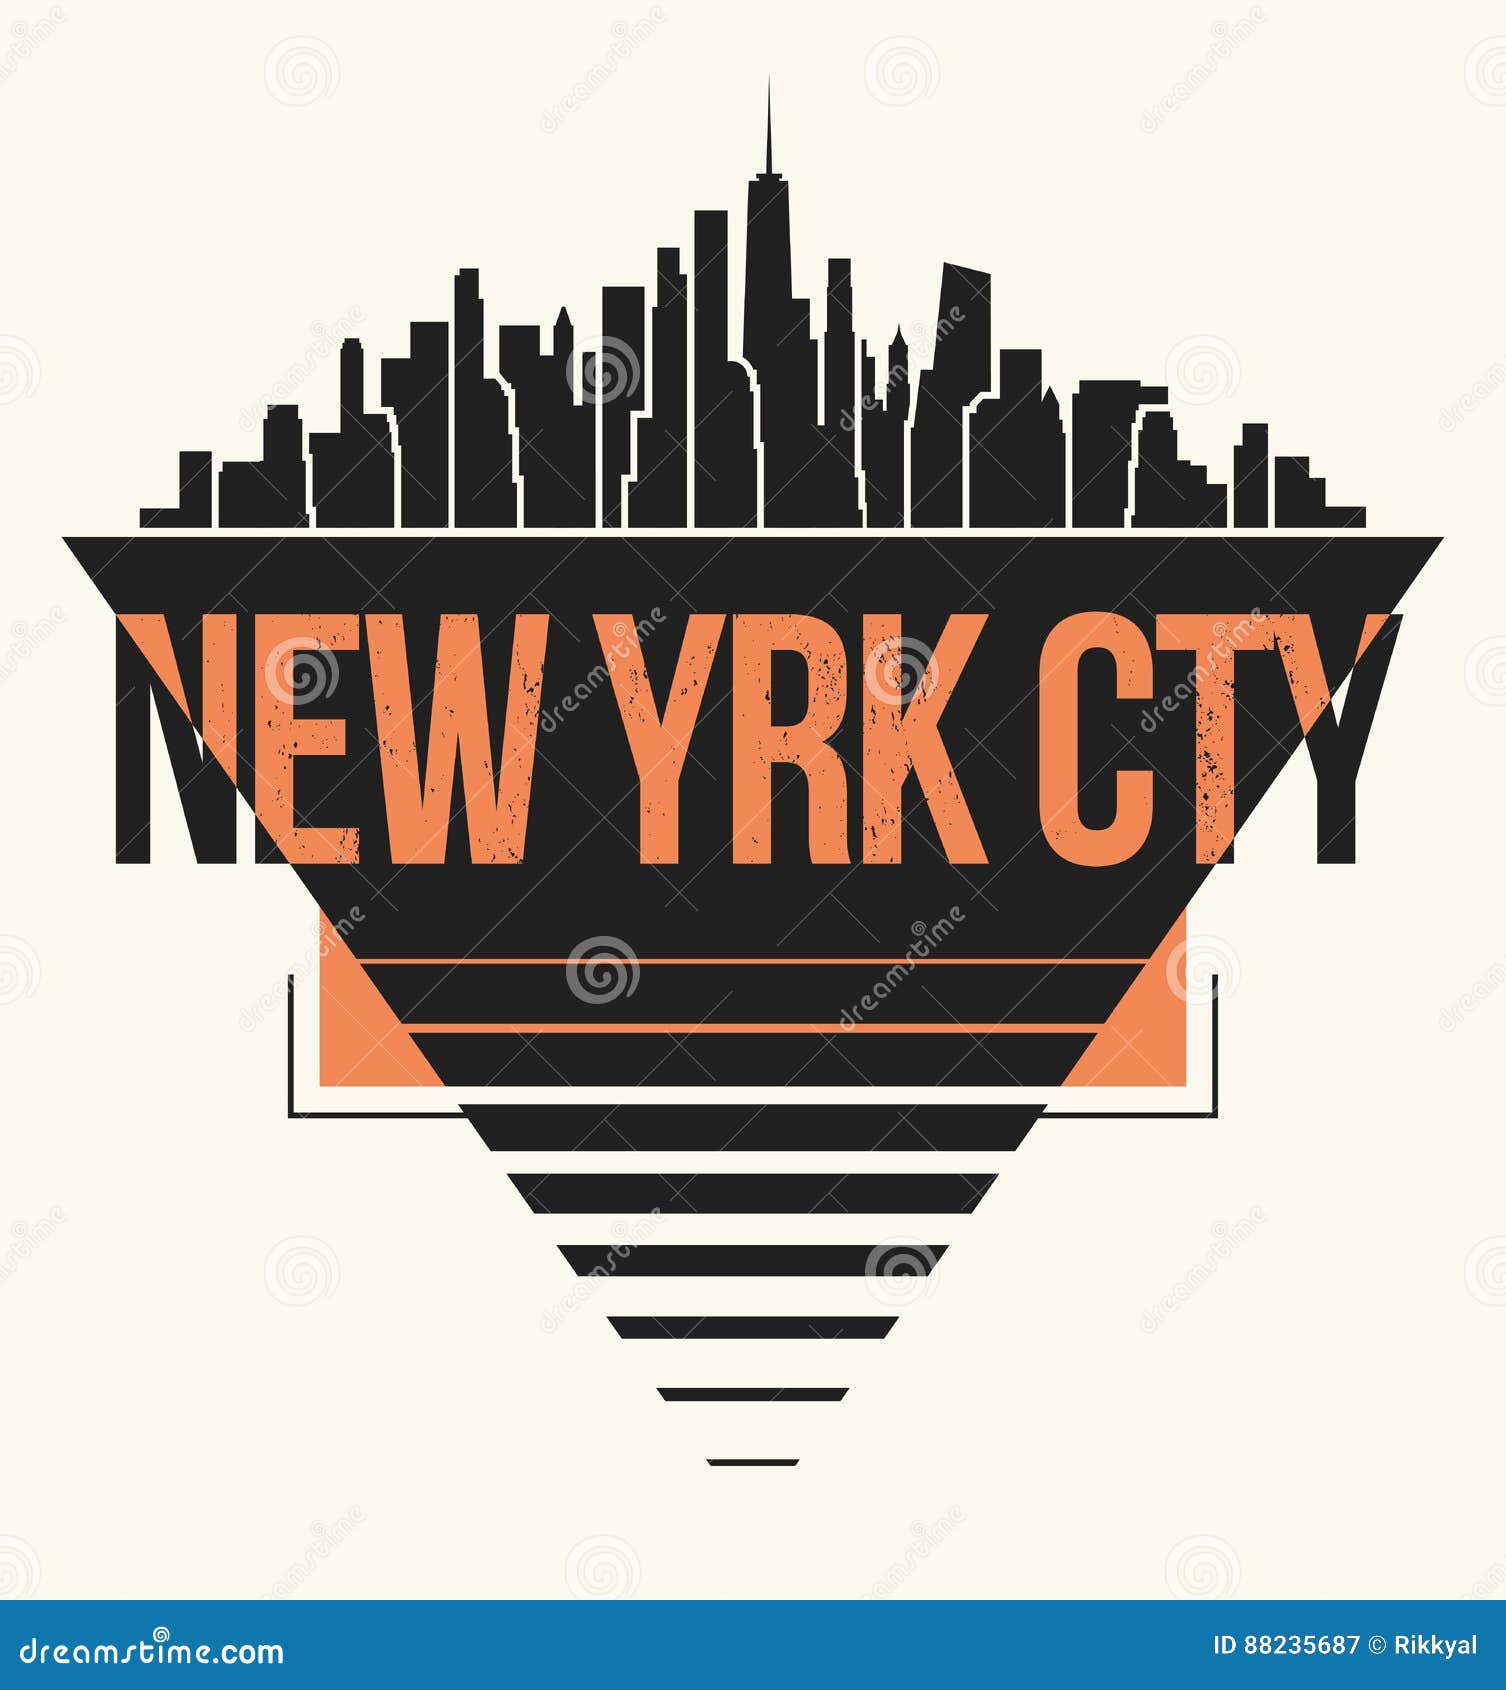 New York City Graphic, T-shirt Design, Tee Print, Typography Stock